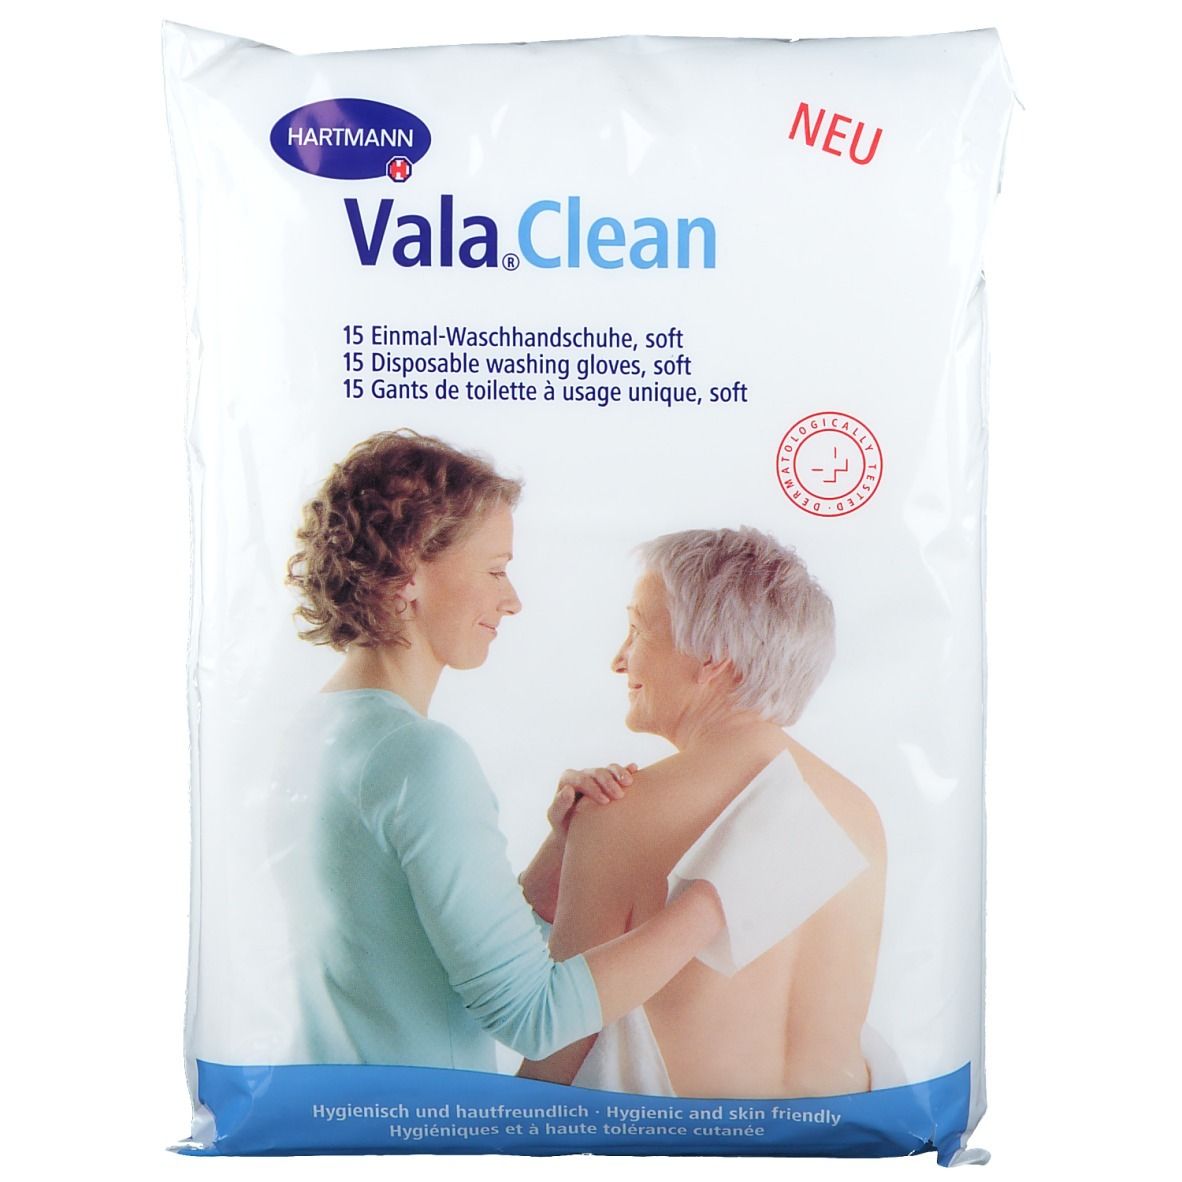 Vala®Clean soft Einmal-Waschhandschuhe